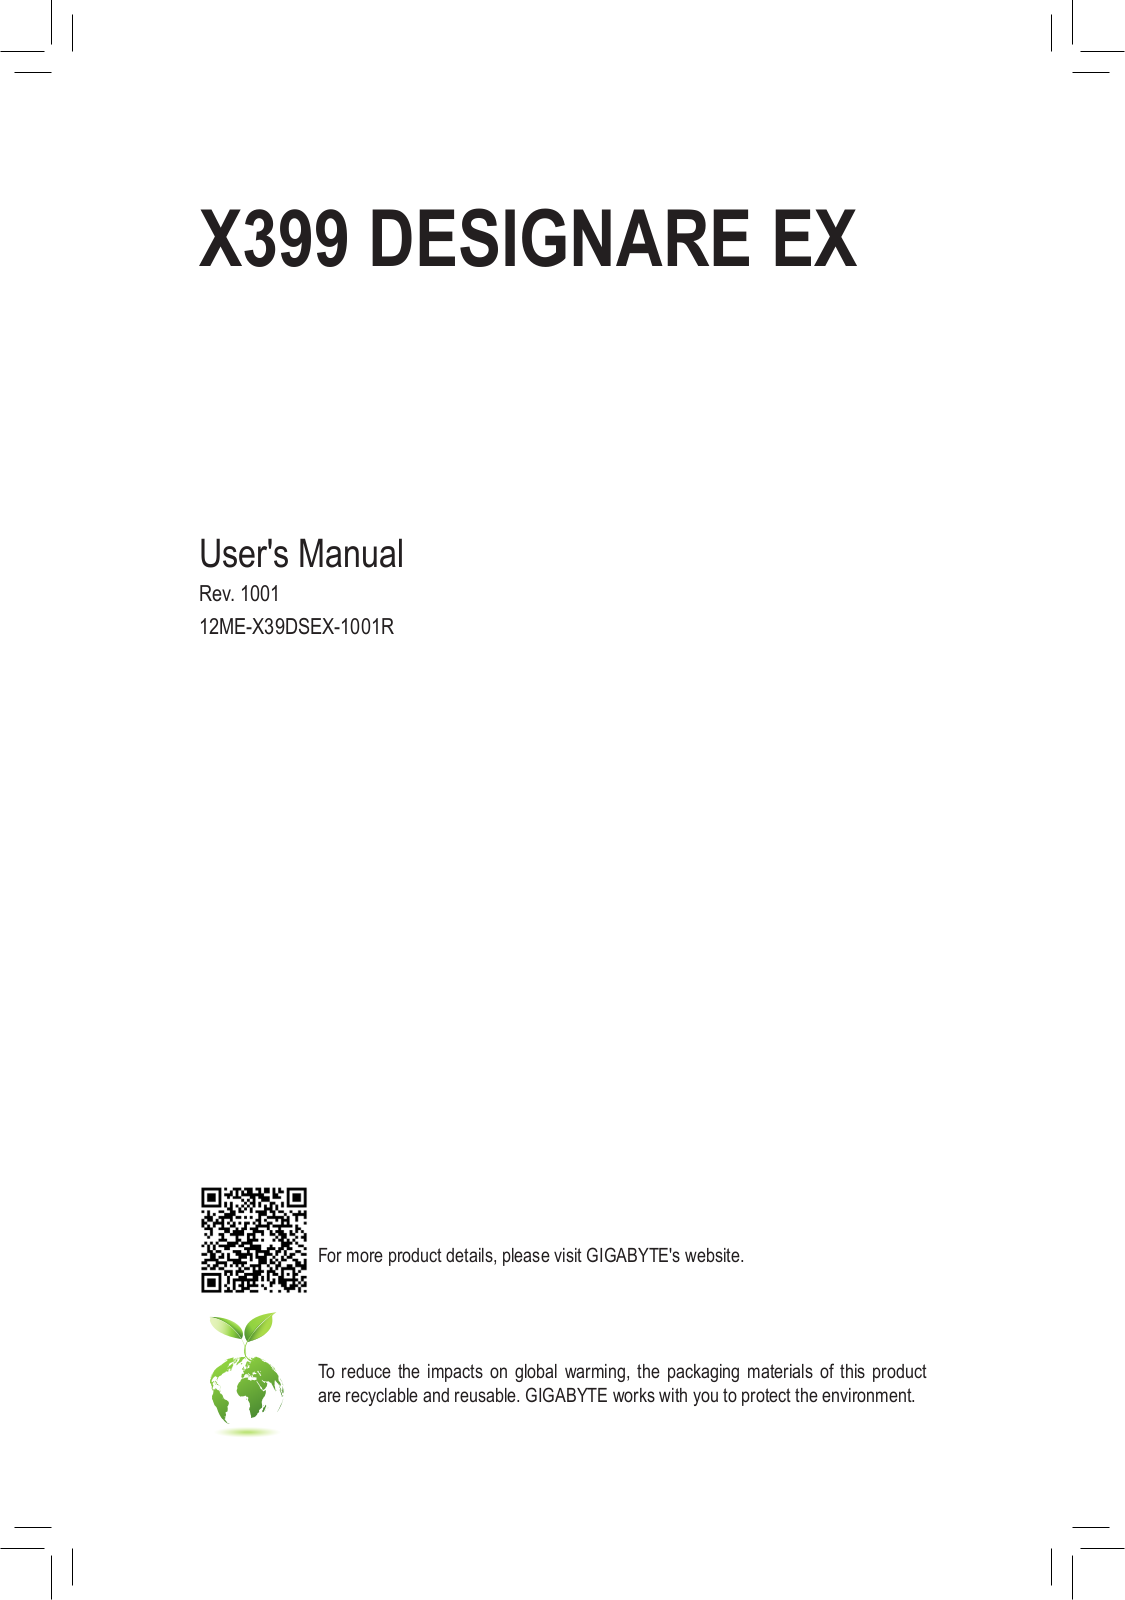 Gigabyte X399 Designare EX Service Manual